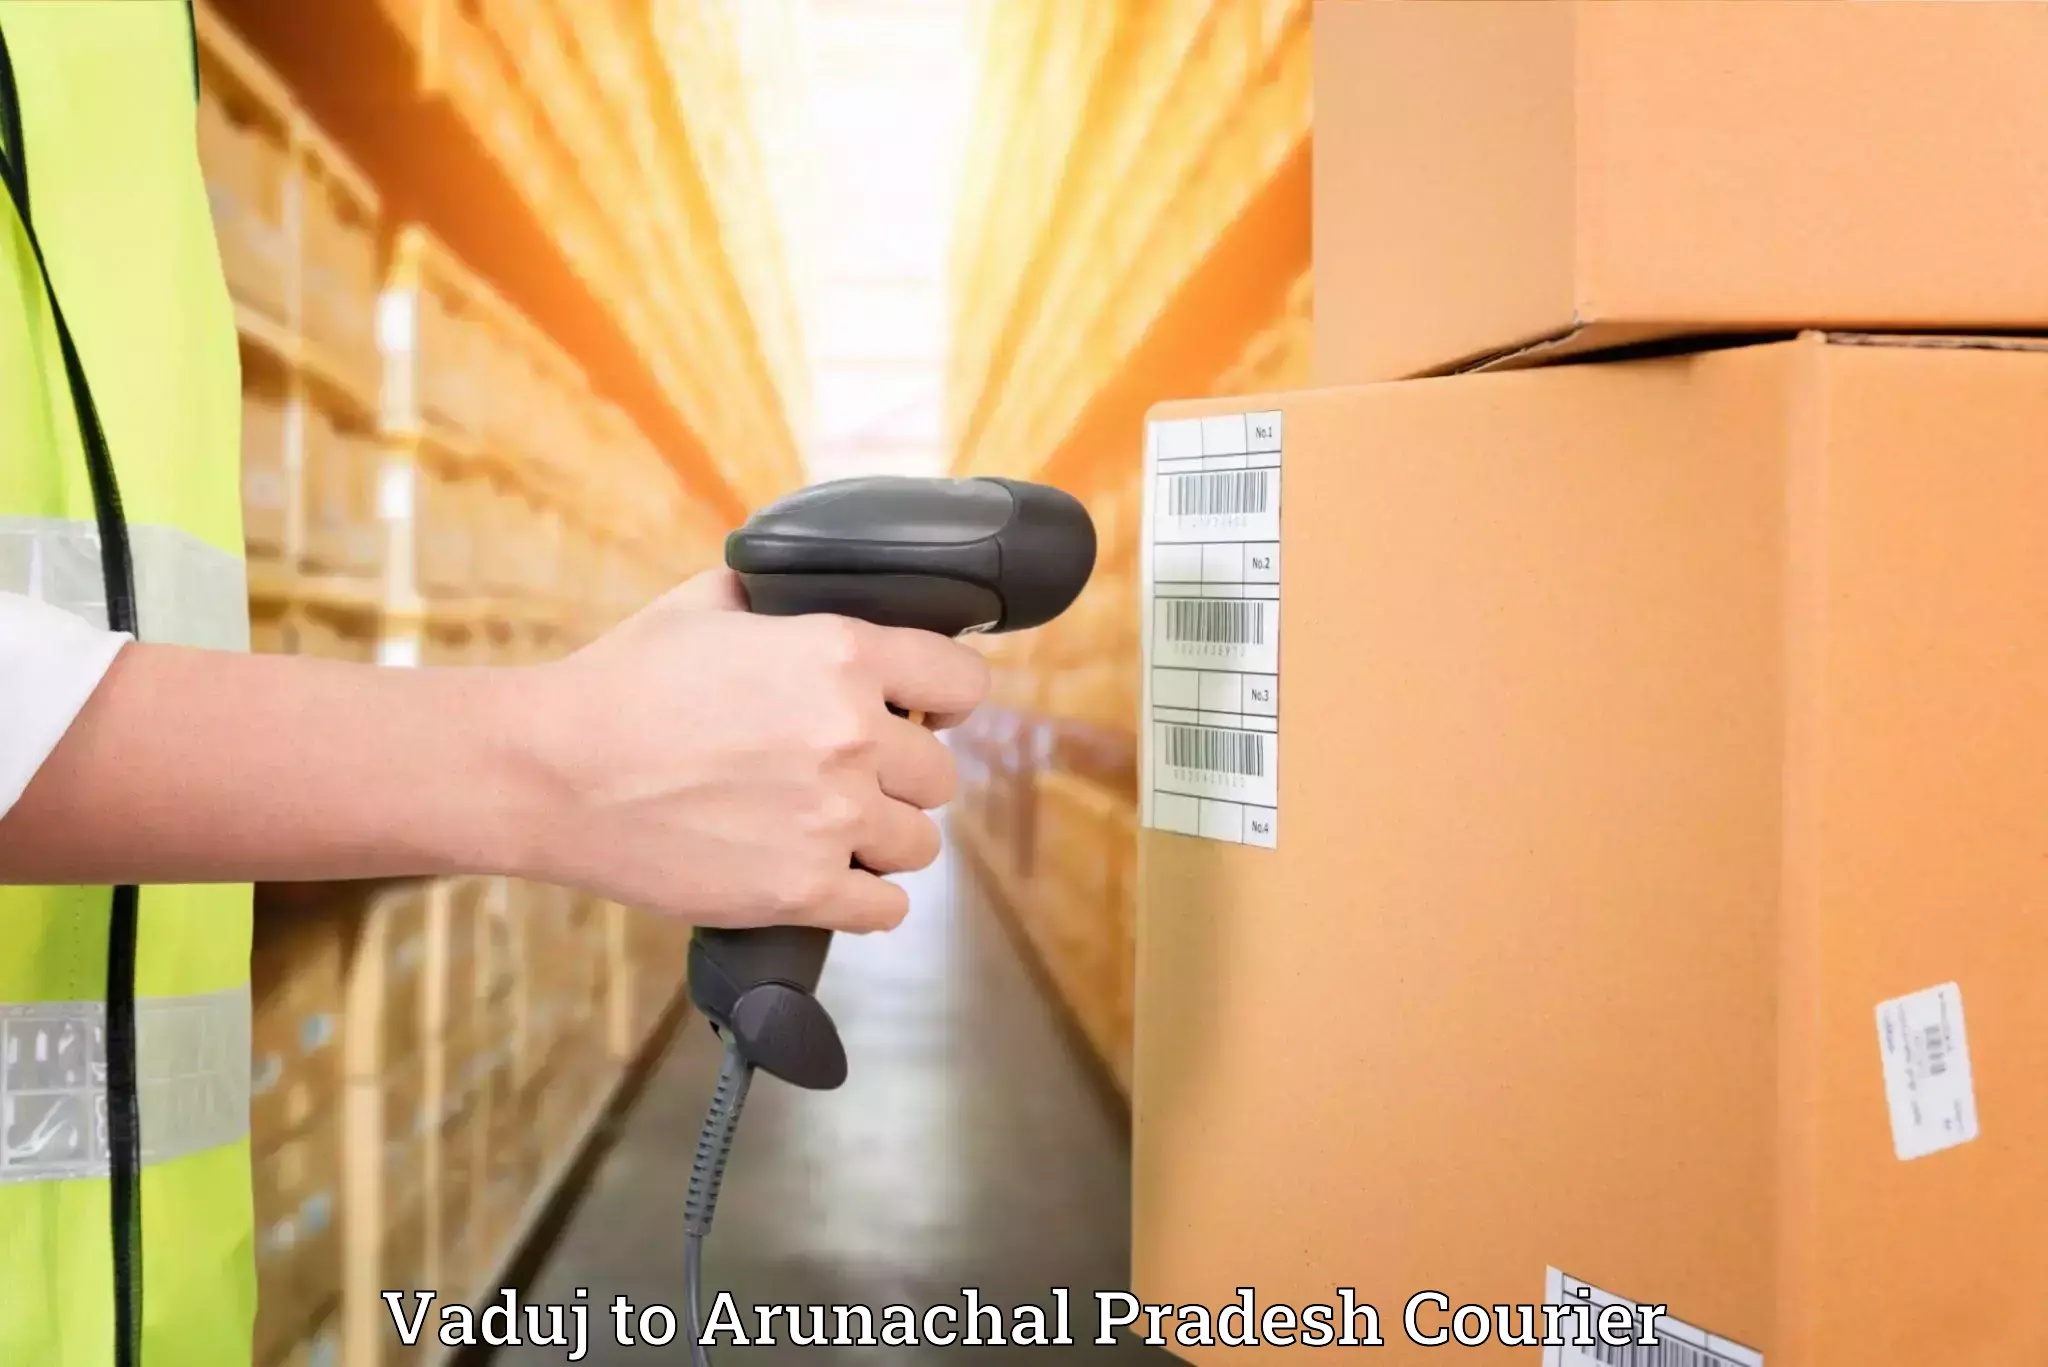 Moving and handling services Vaduj to Arunachal Pradesh